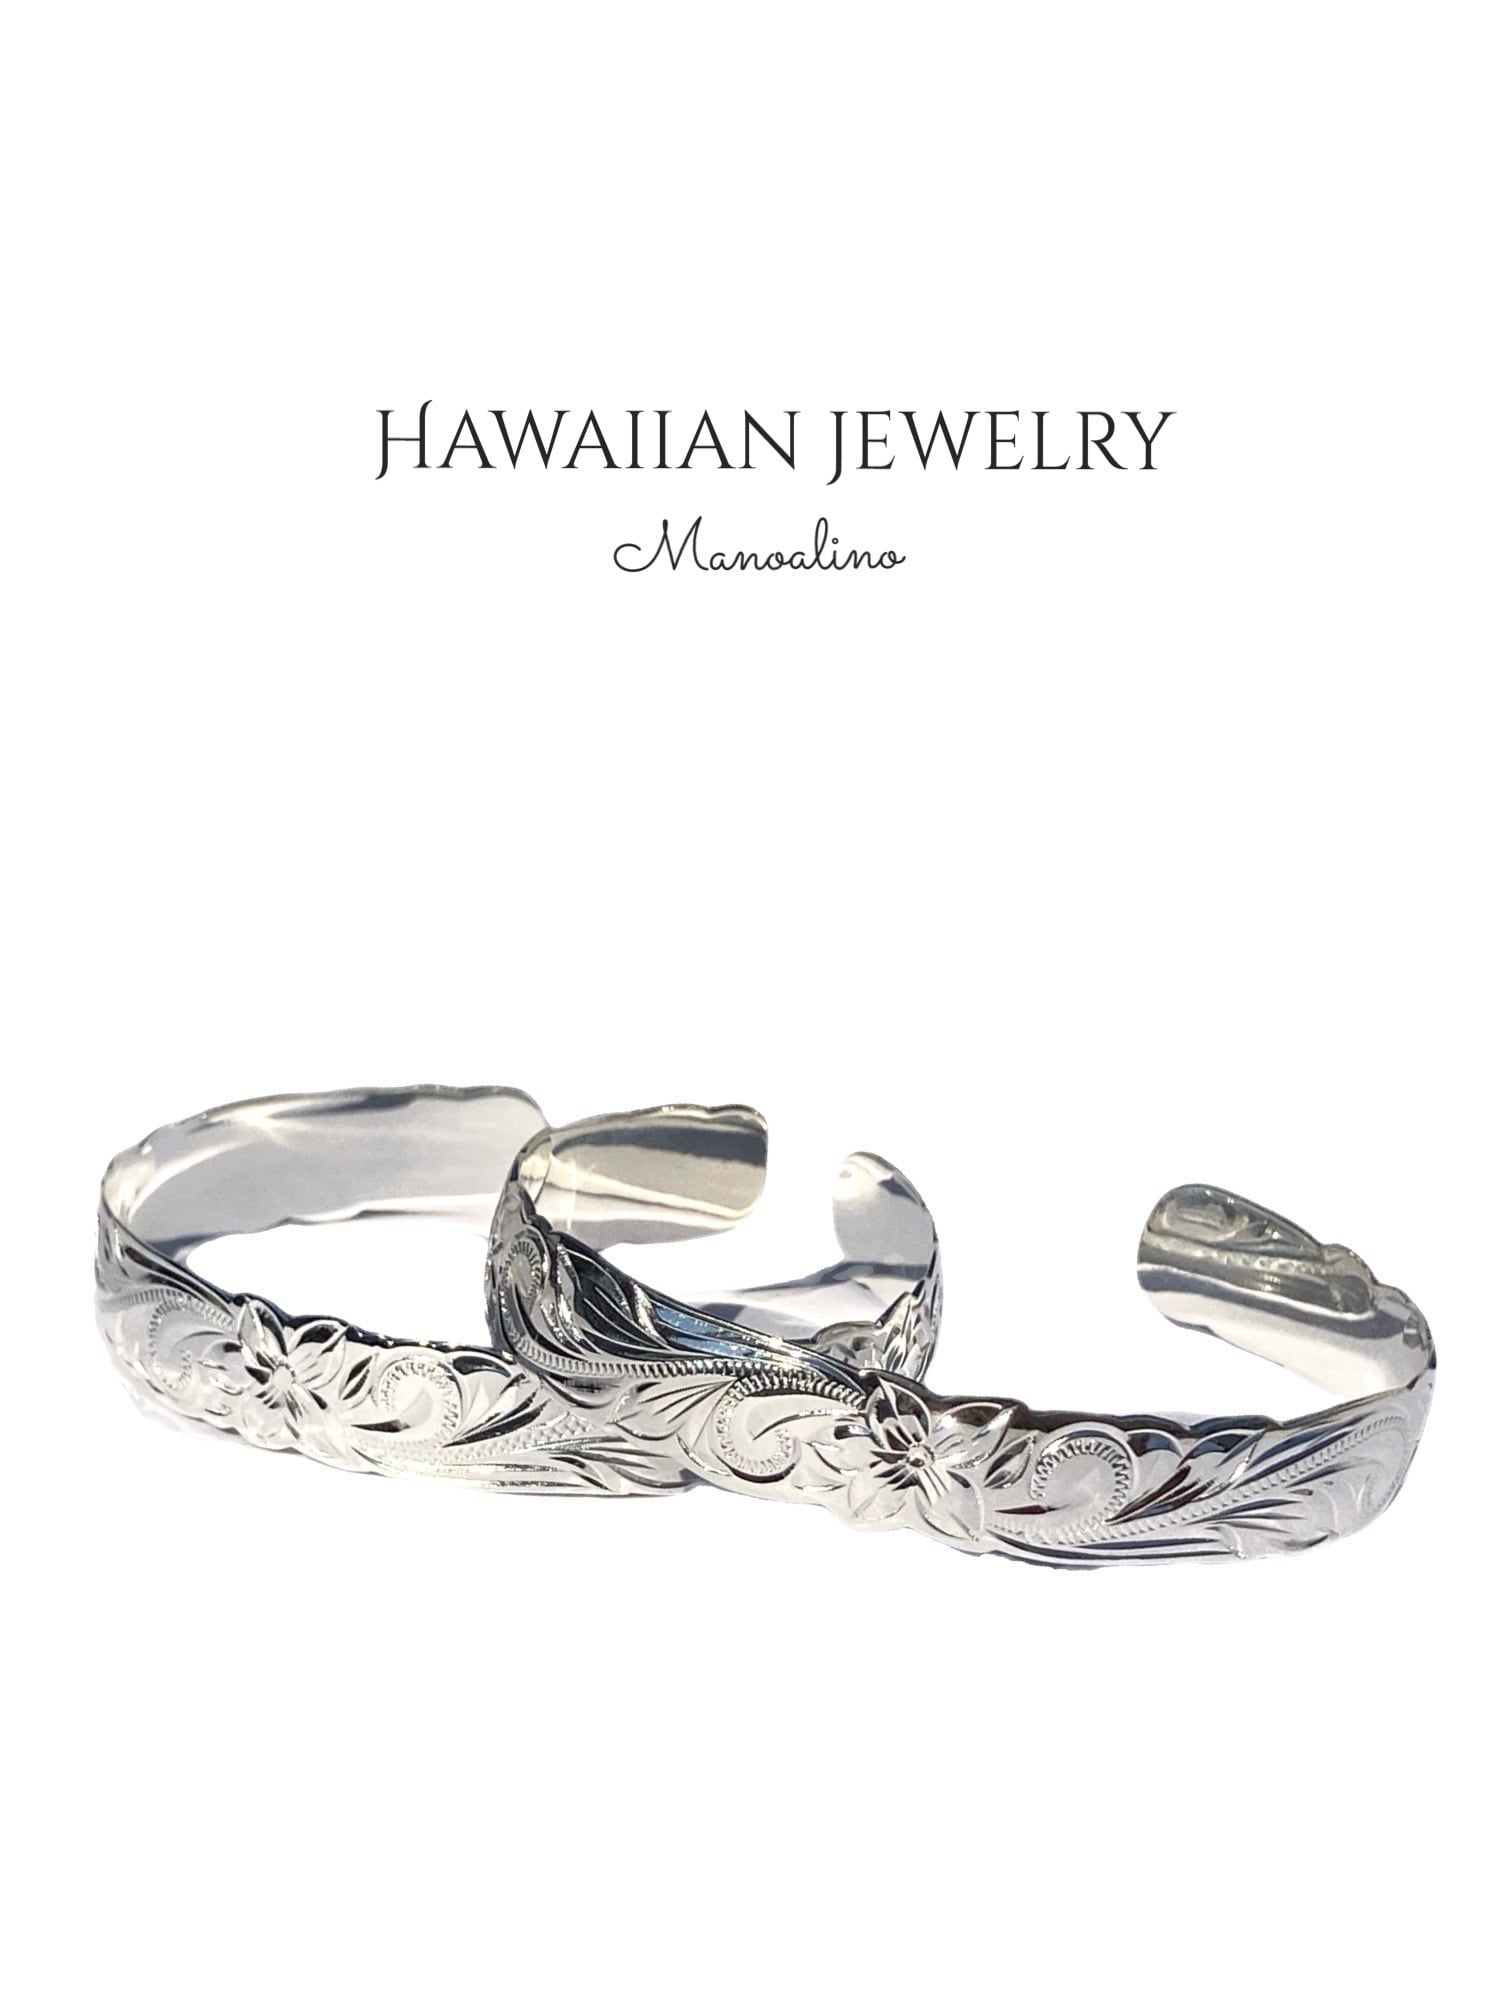 Hawaii an jewelry 925silver